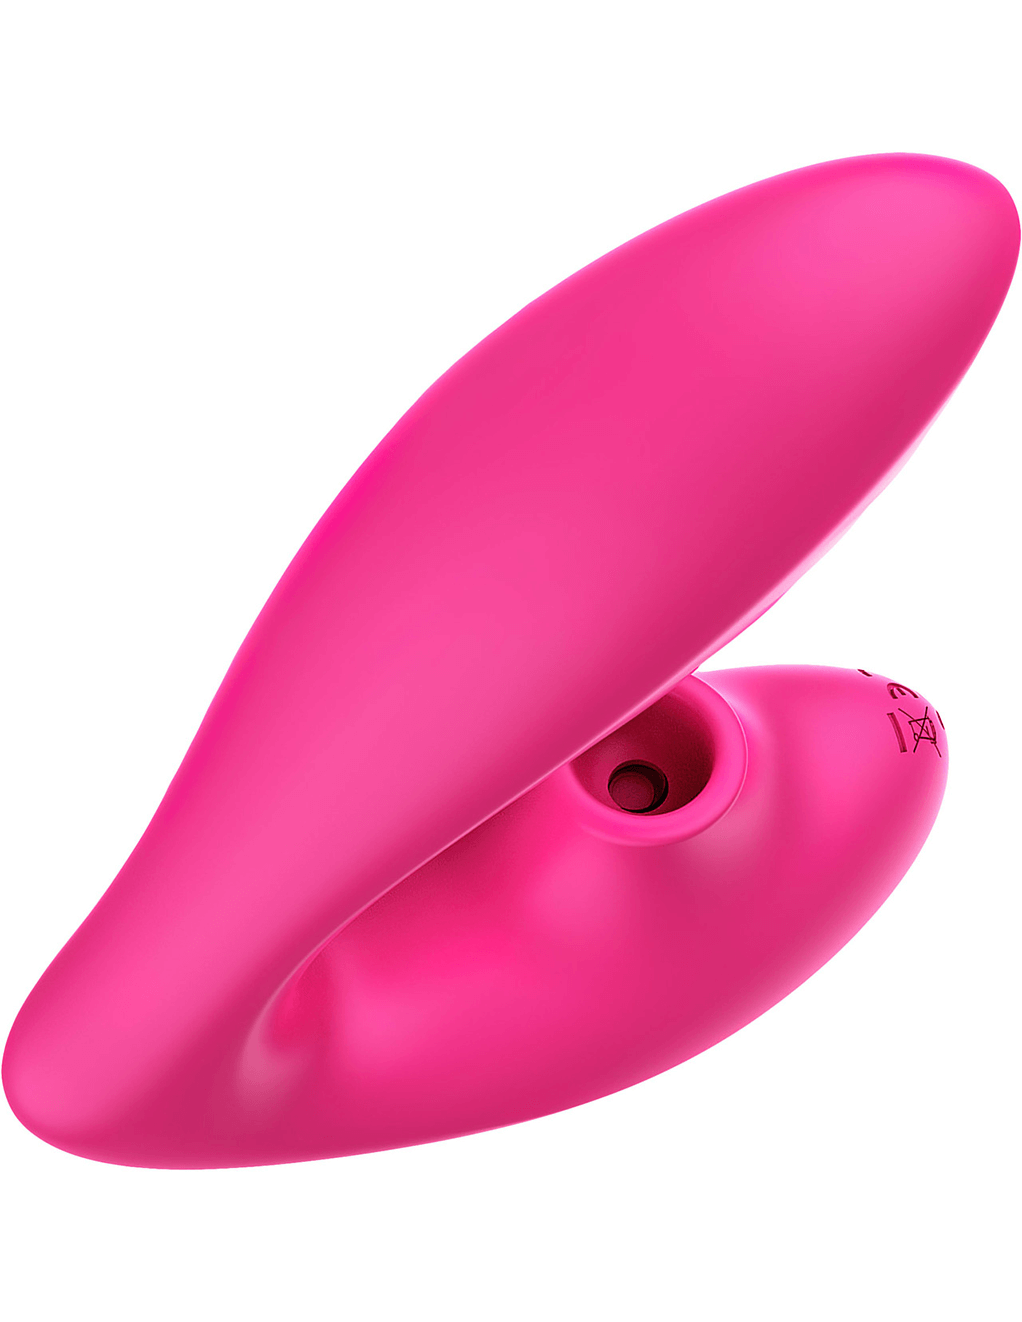 Tracy's Dog 10 Speeds Vagina Sucking Vibrator G Spot Clit Dildo Clitoris  Stimulator Sex Toys For Woman Sexual Wellness (Pink)